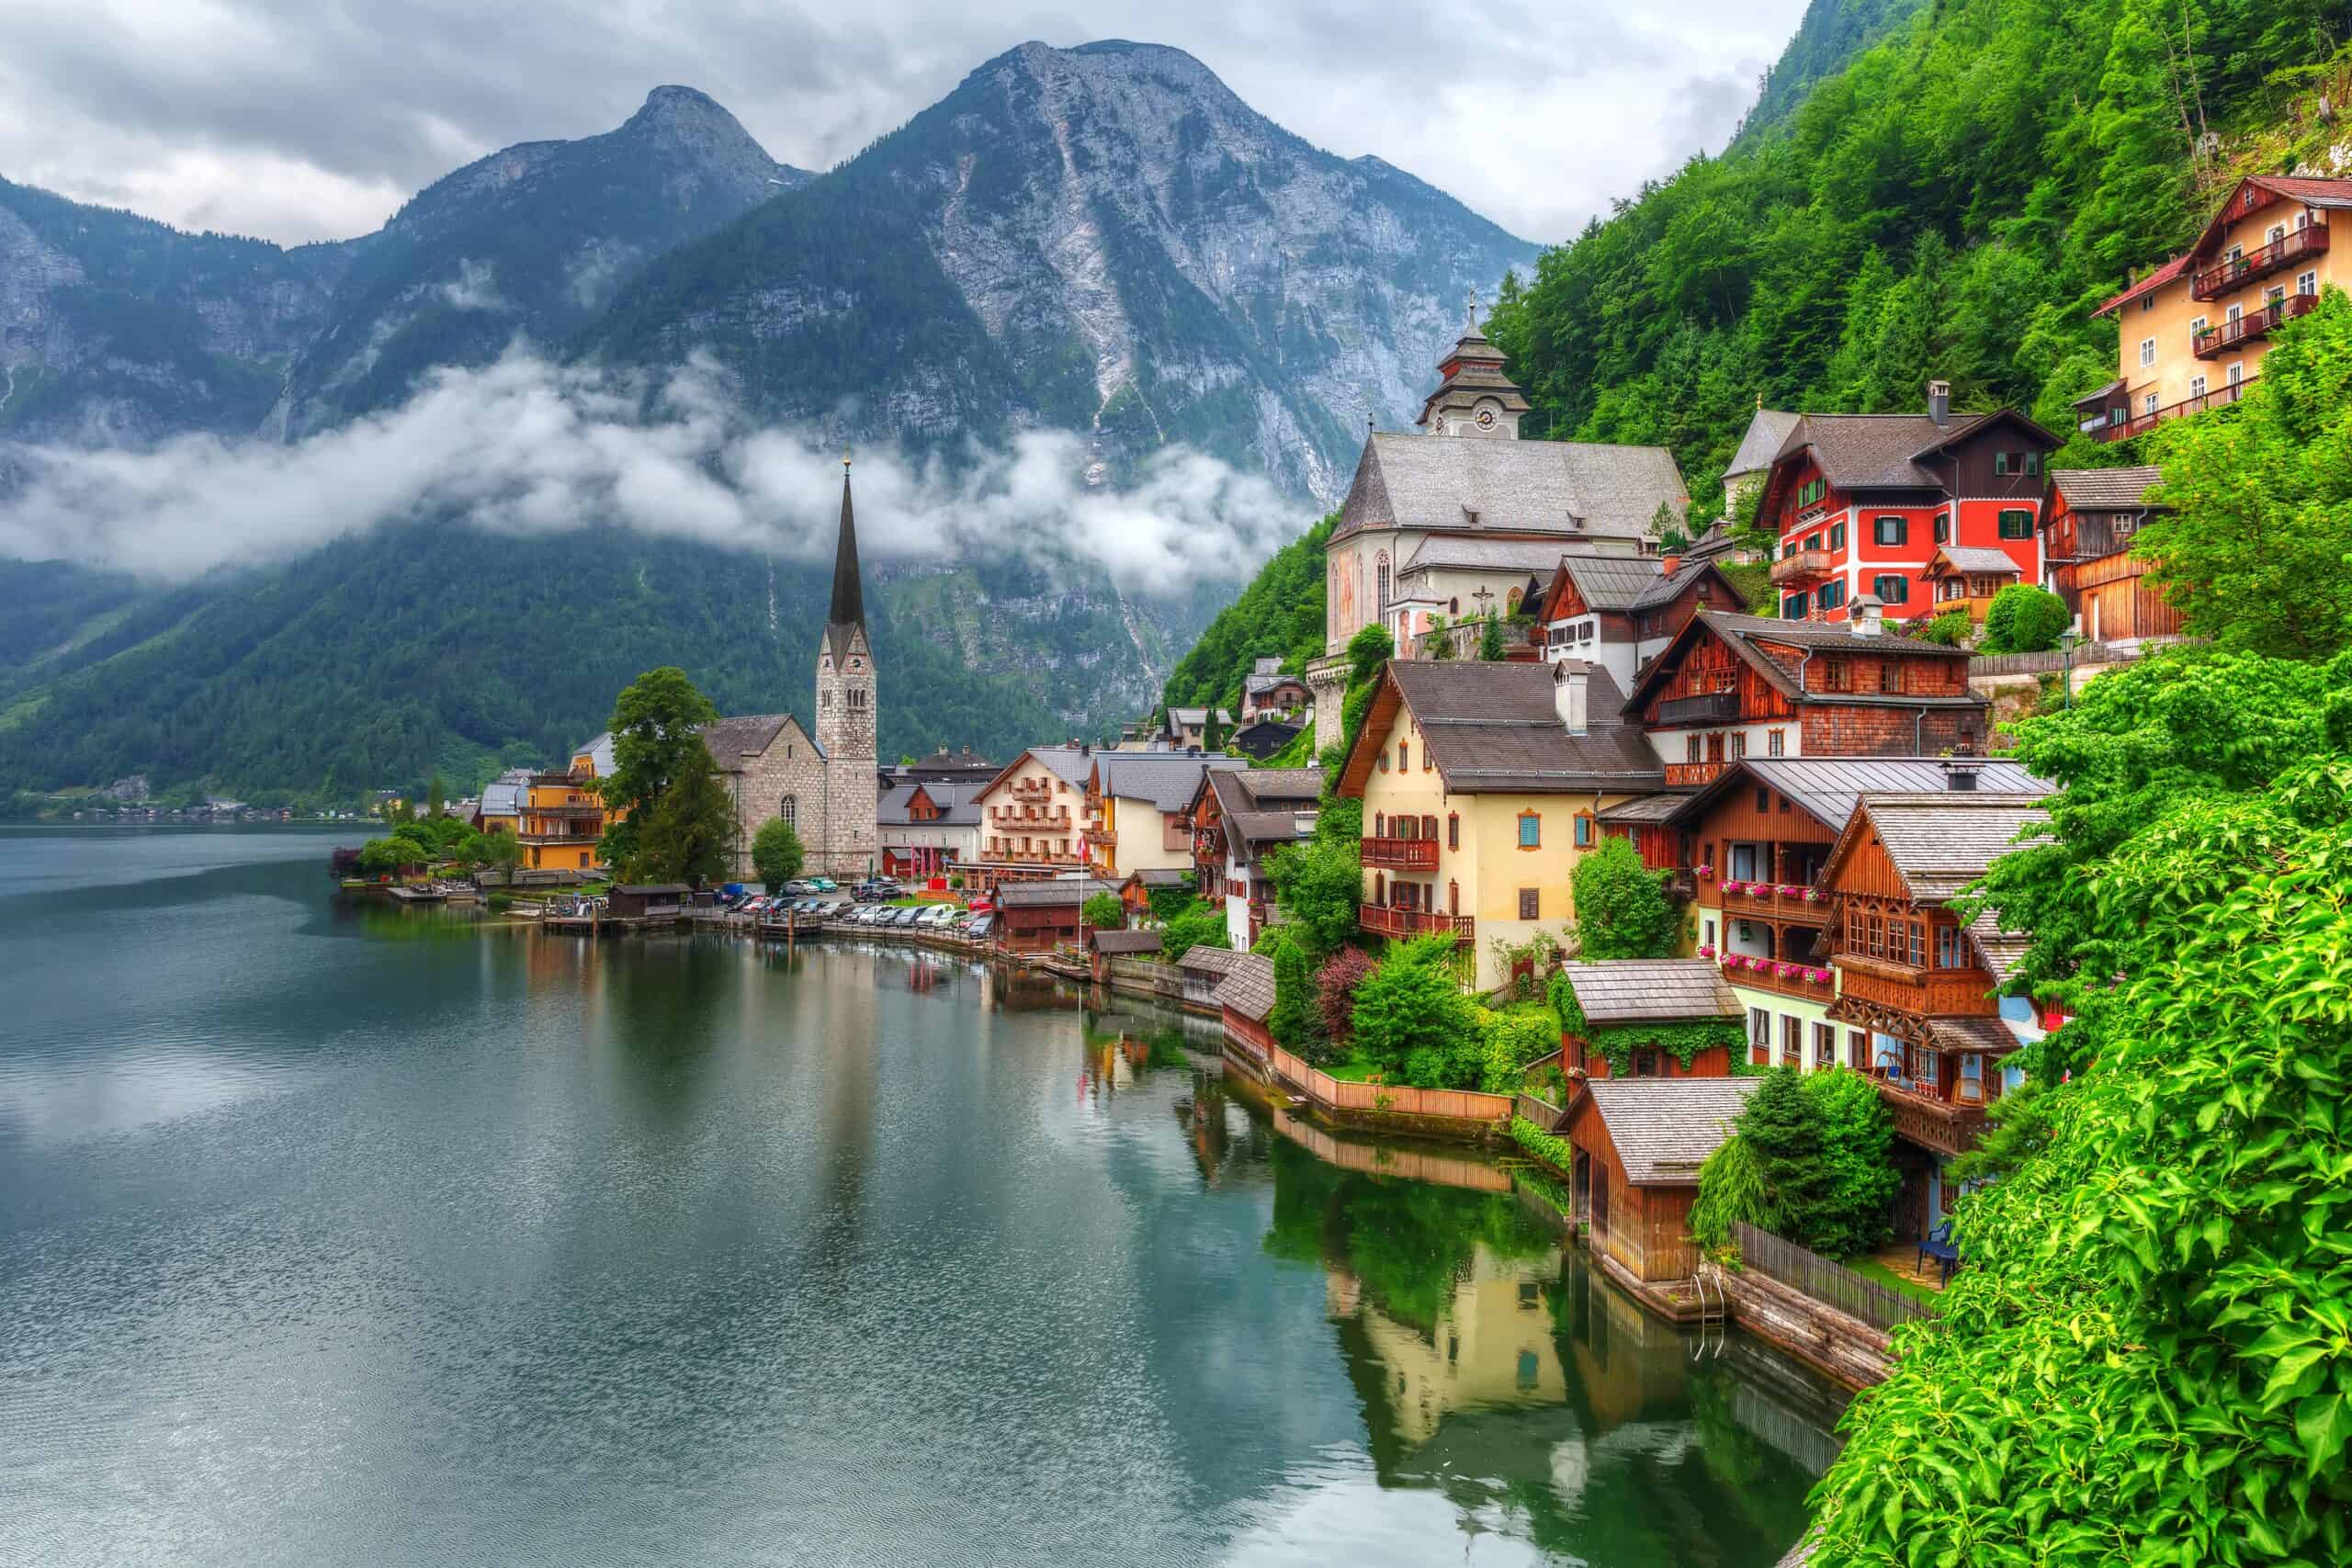 Austria | Hallstatt village in Austria